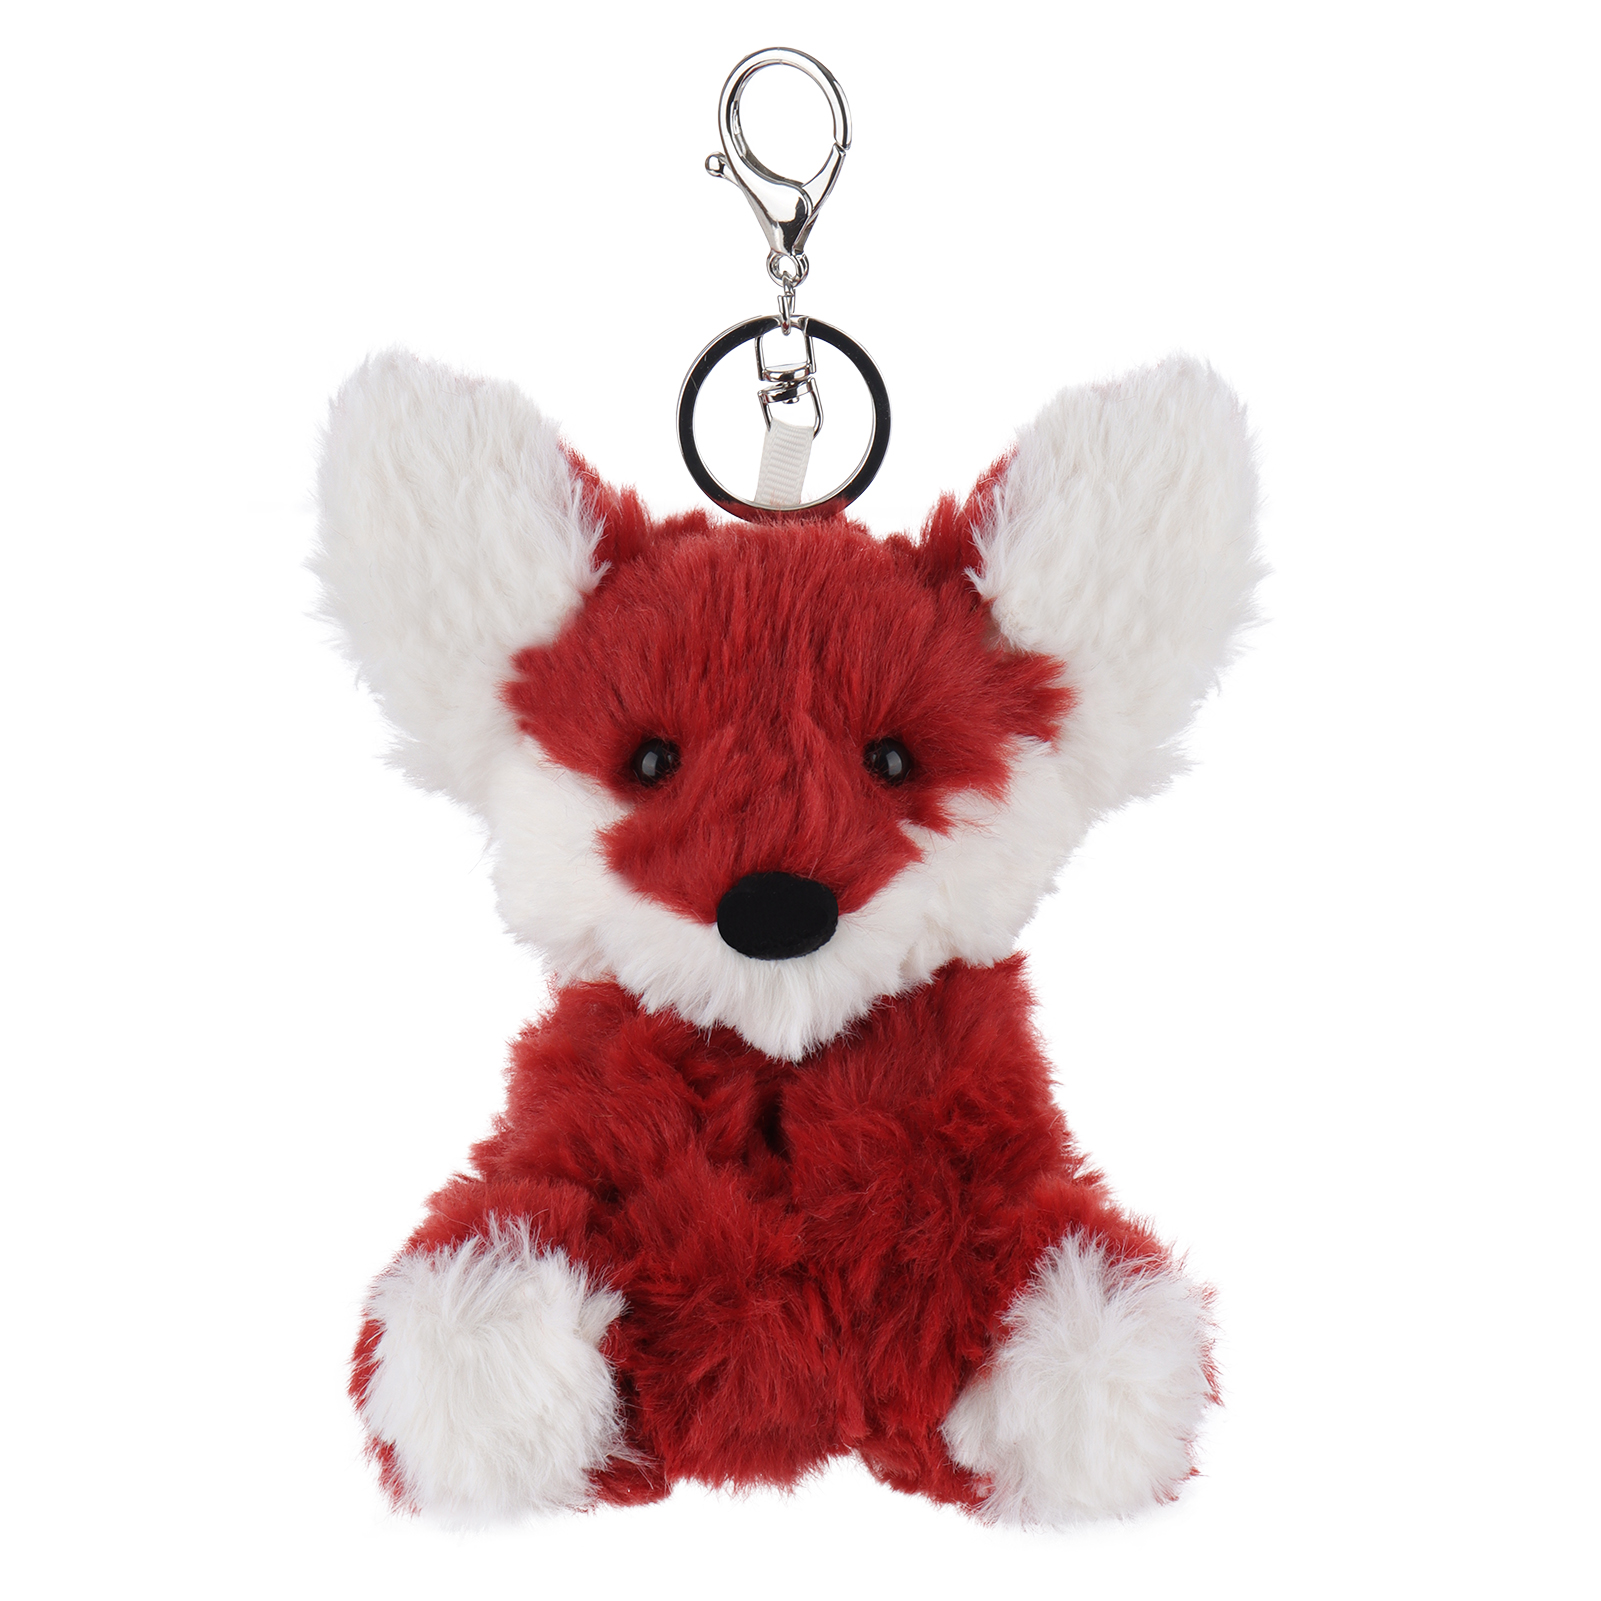 Apricot Lamb key-red fox Stuffed Animal Soft Plush Toys